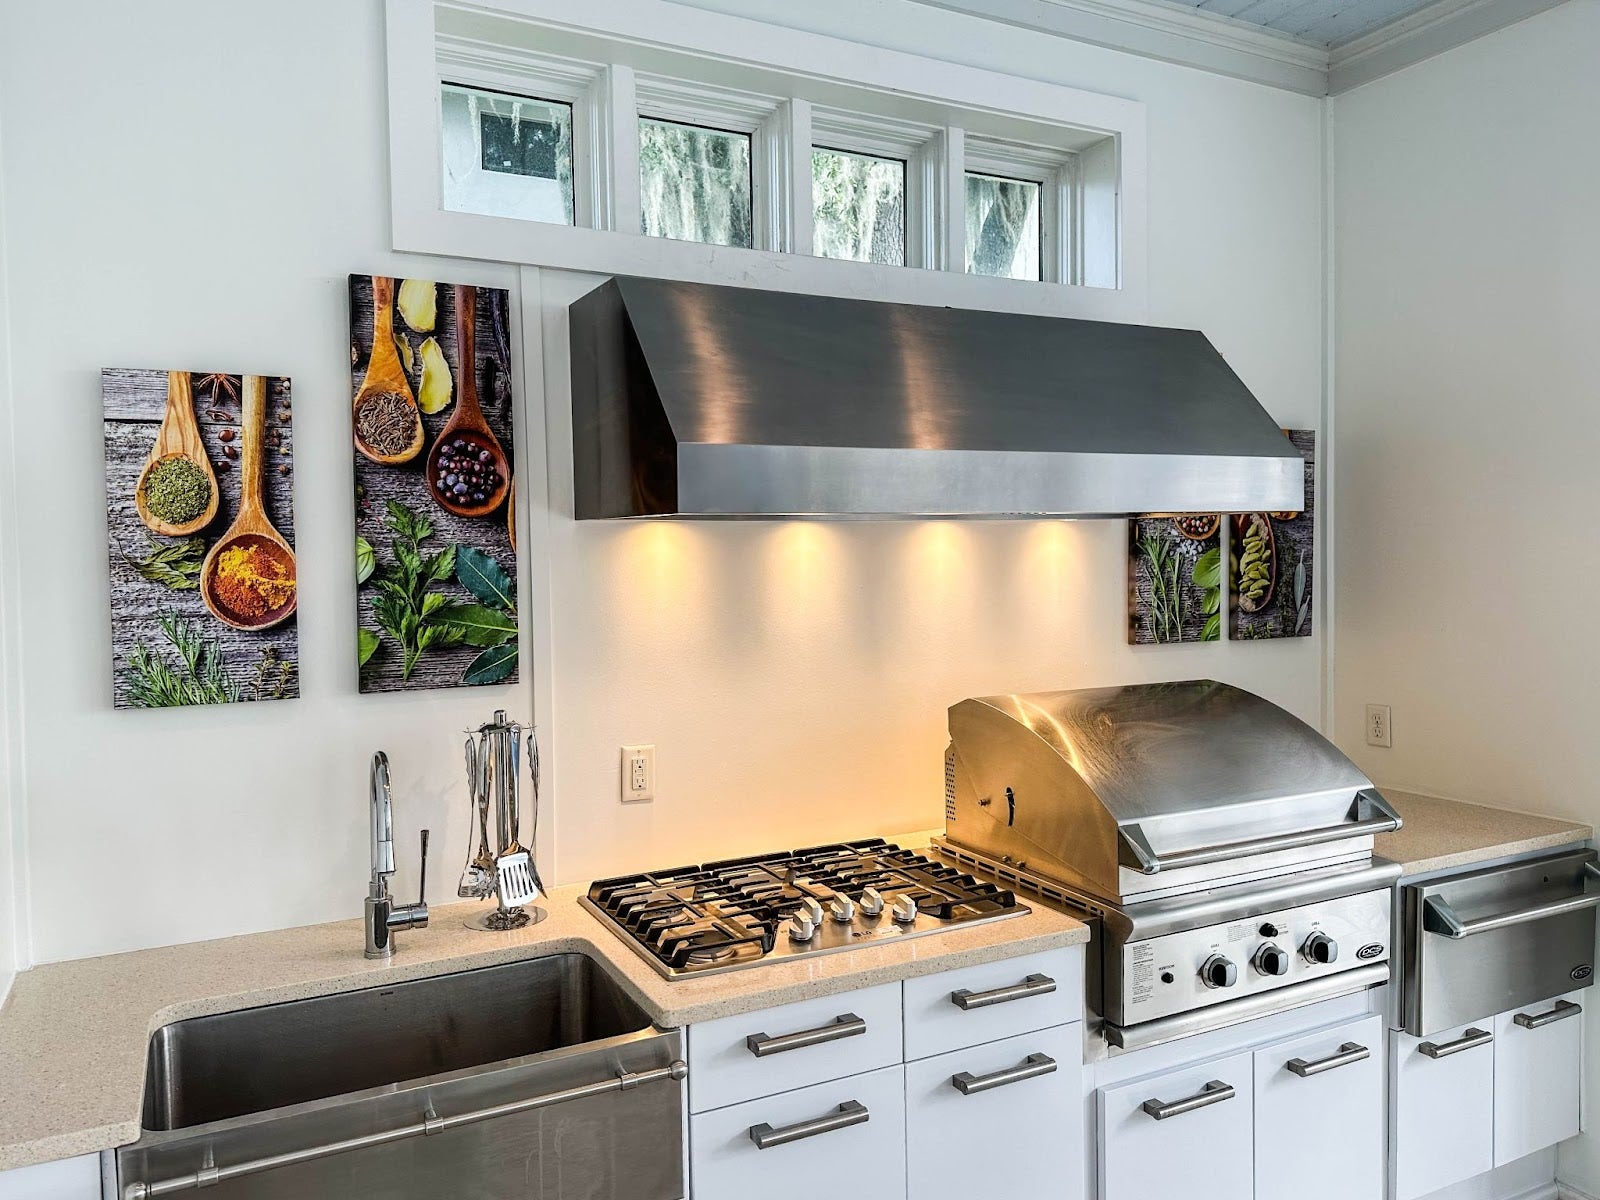 Stainless steel appliances, white cabinets, and a Proline range hood in a modern kitchen. - Proline Range Hoods - prolinerangehoods.com 